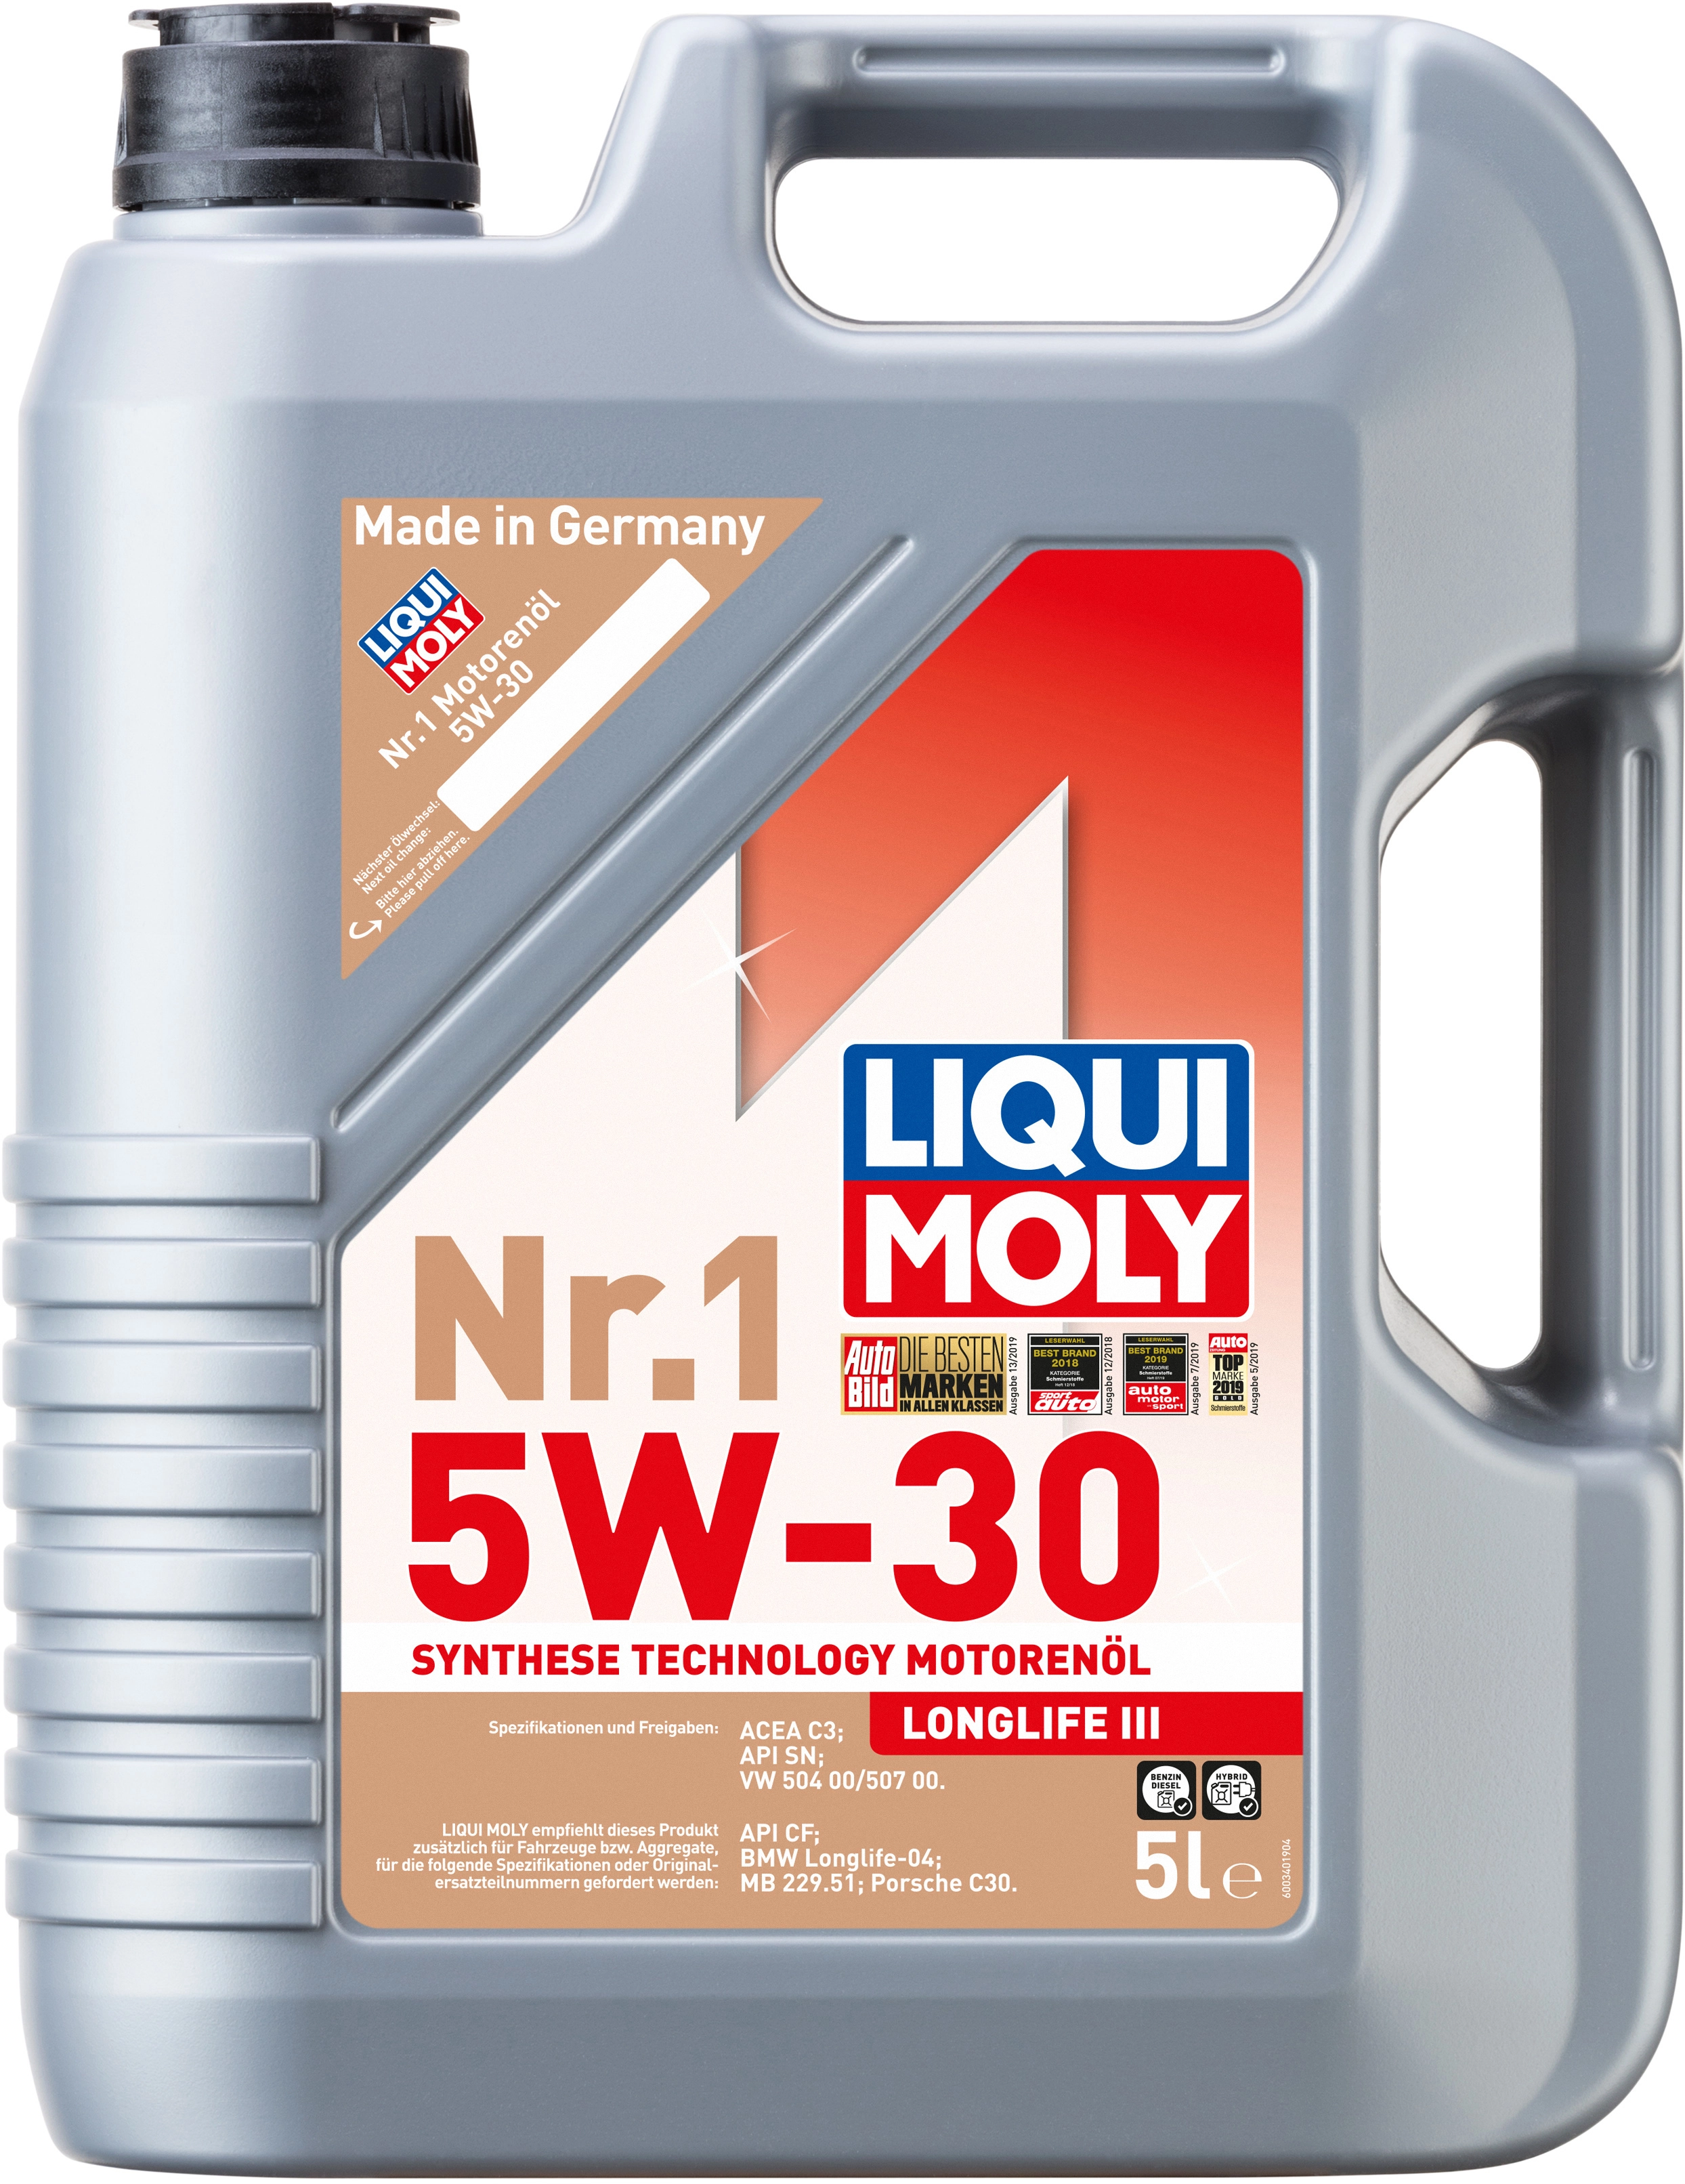 Liqui Moly Nr. 1 Leichtlaufmotoröl 10W-40 5 l kaufen bei OBI